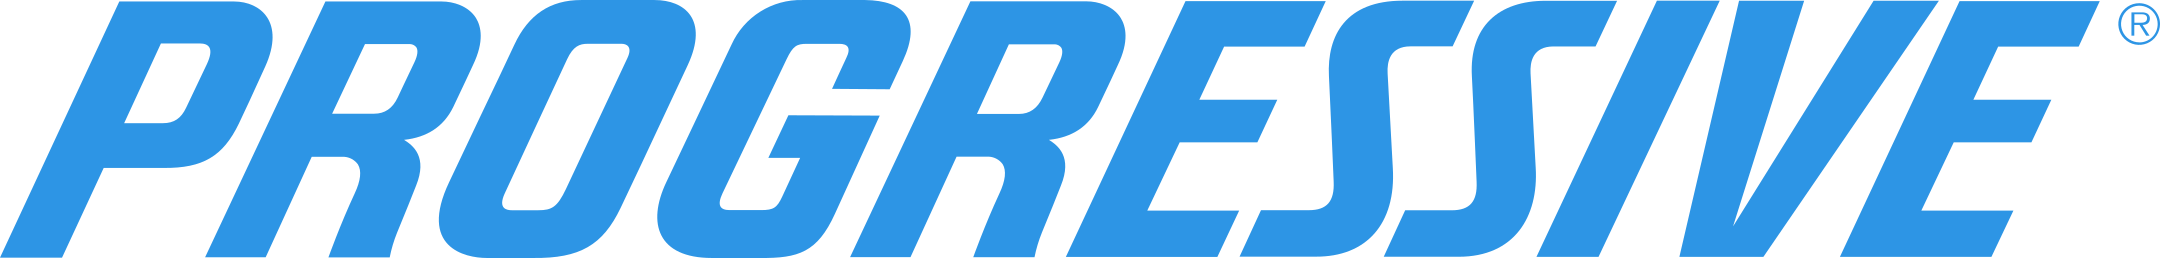 progressive logo 1 - Progressive Logo